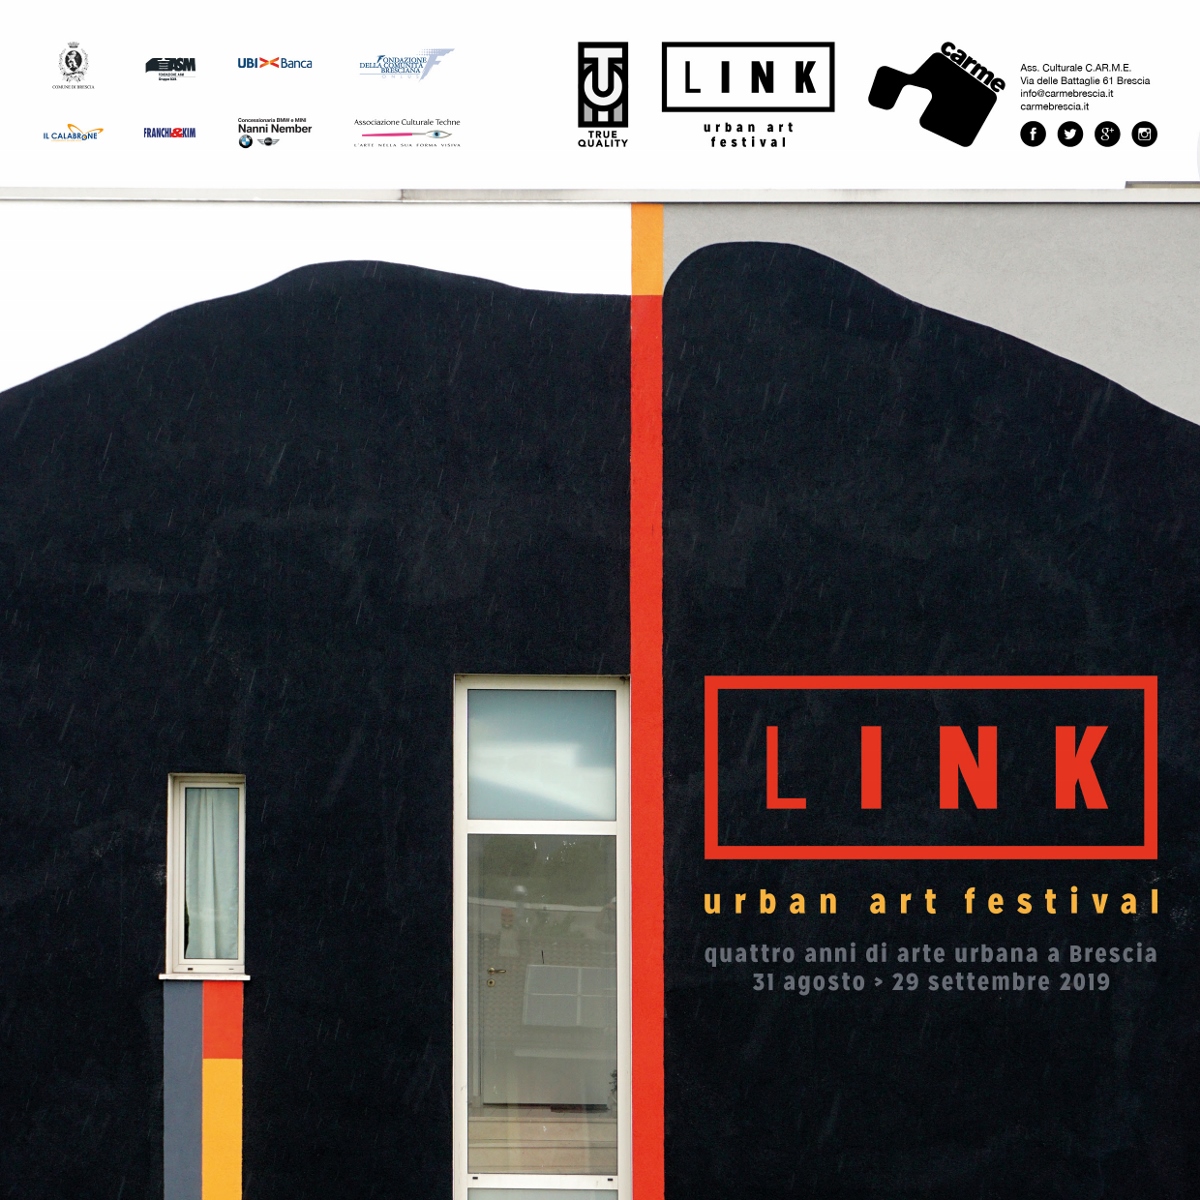 LINK - urban art festival